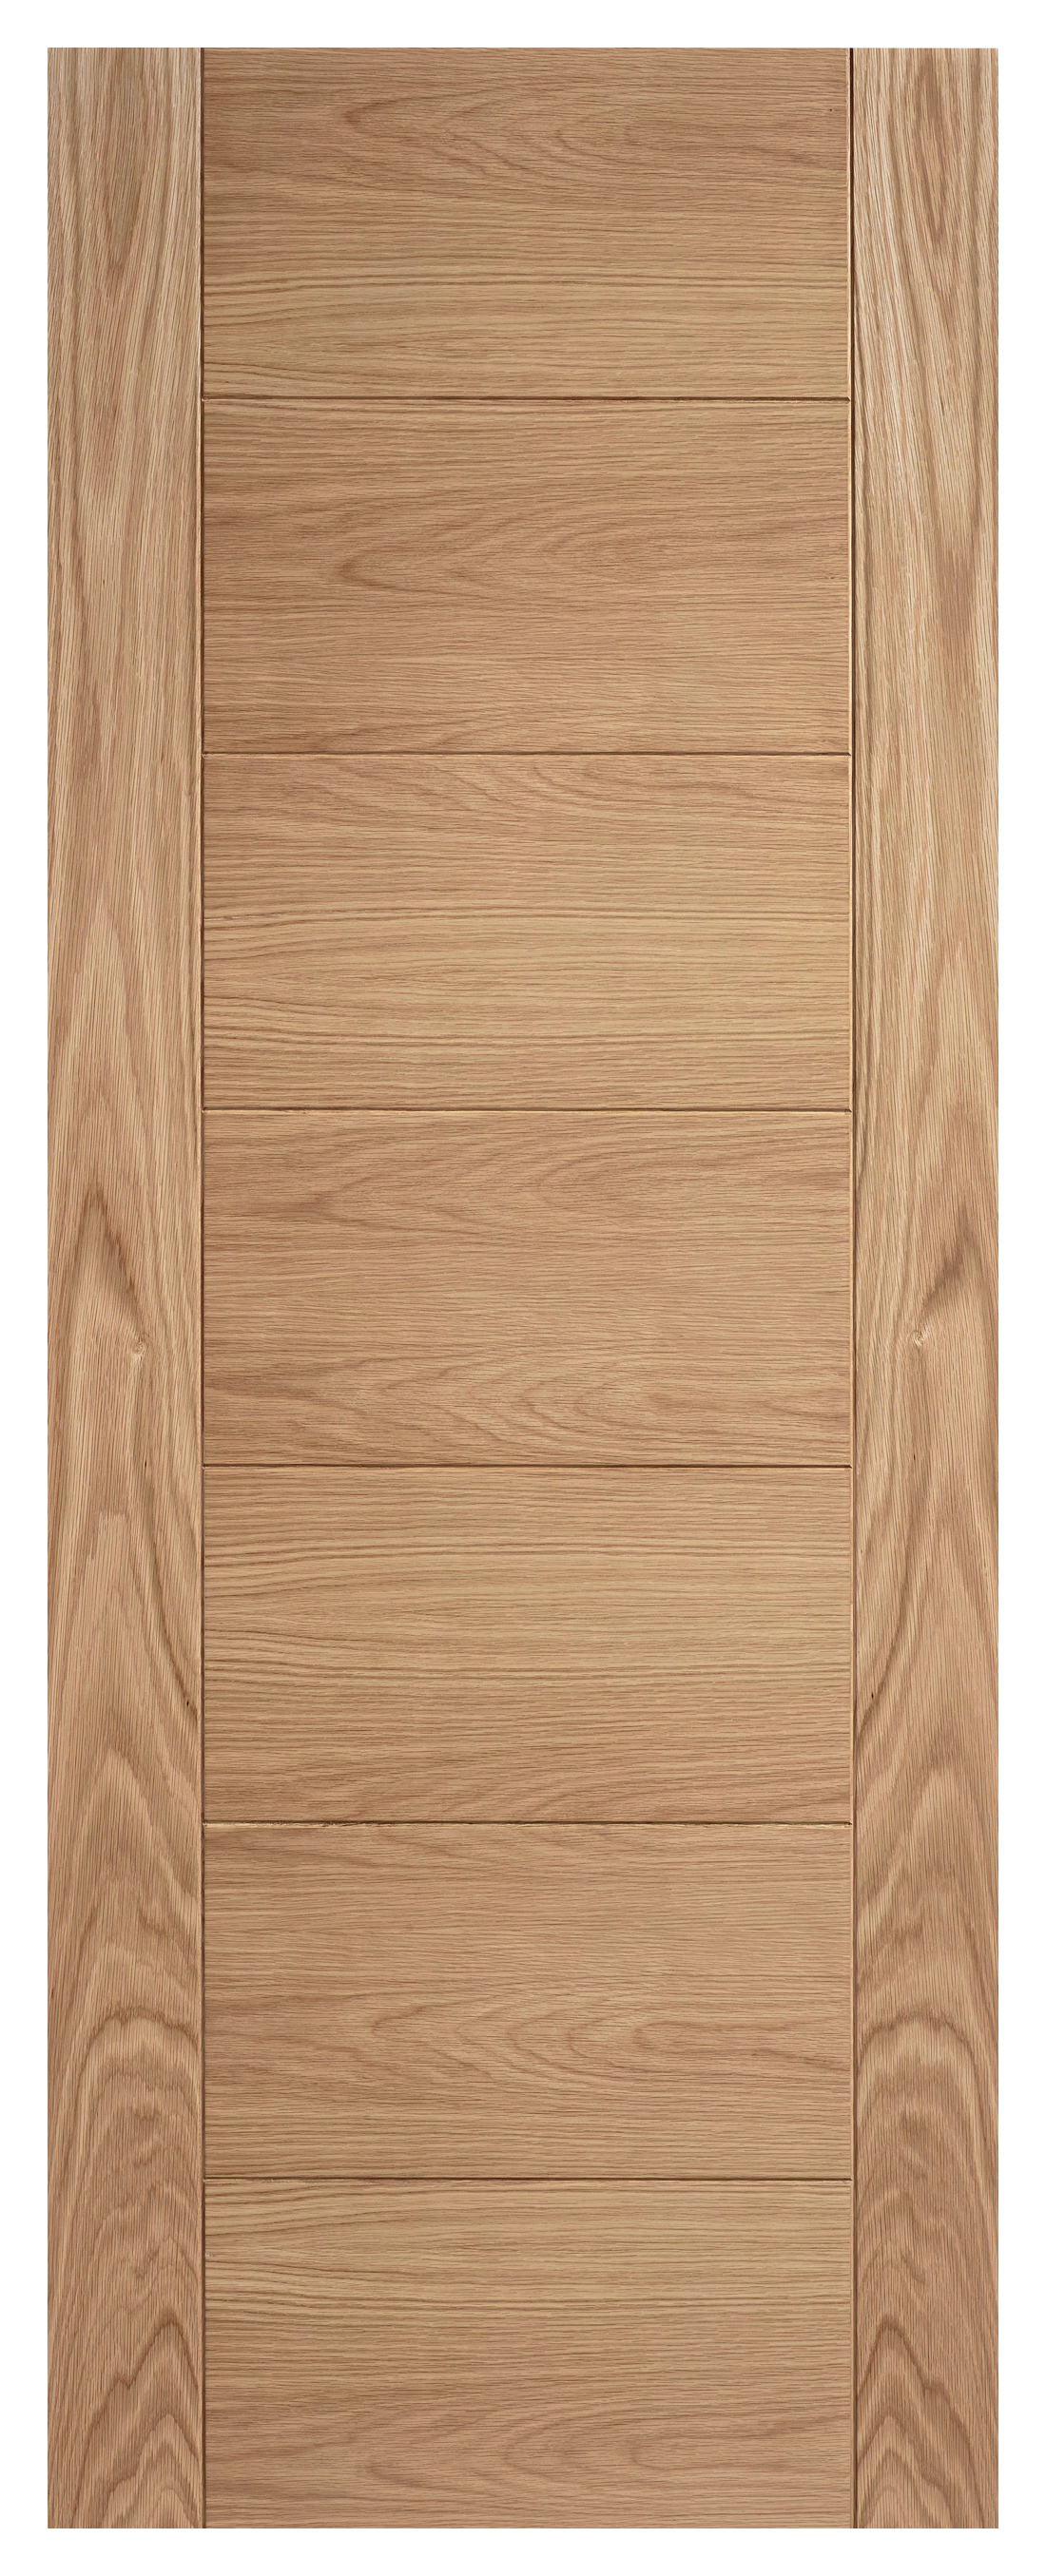 Image of LPD Internal Carini 7 Panel Unfinished Oak FD30 Fire Door - 726 x 2040mm